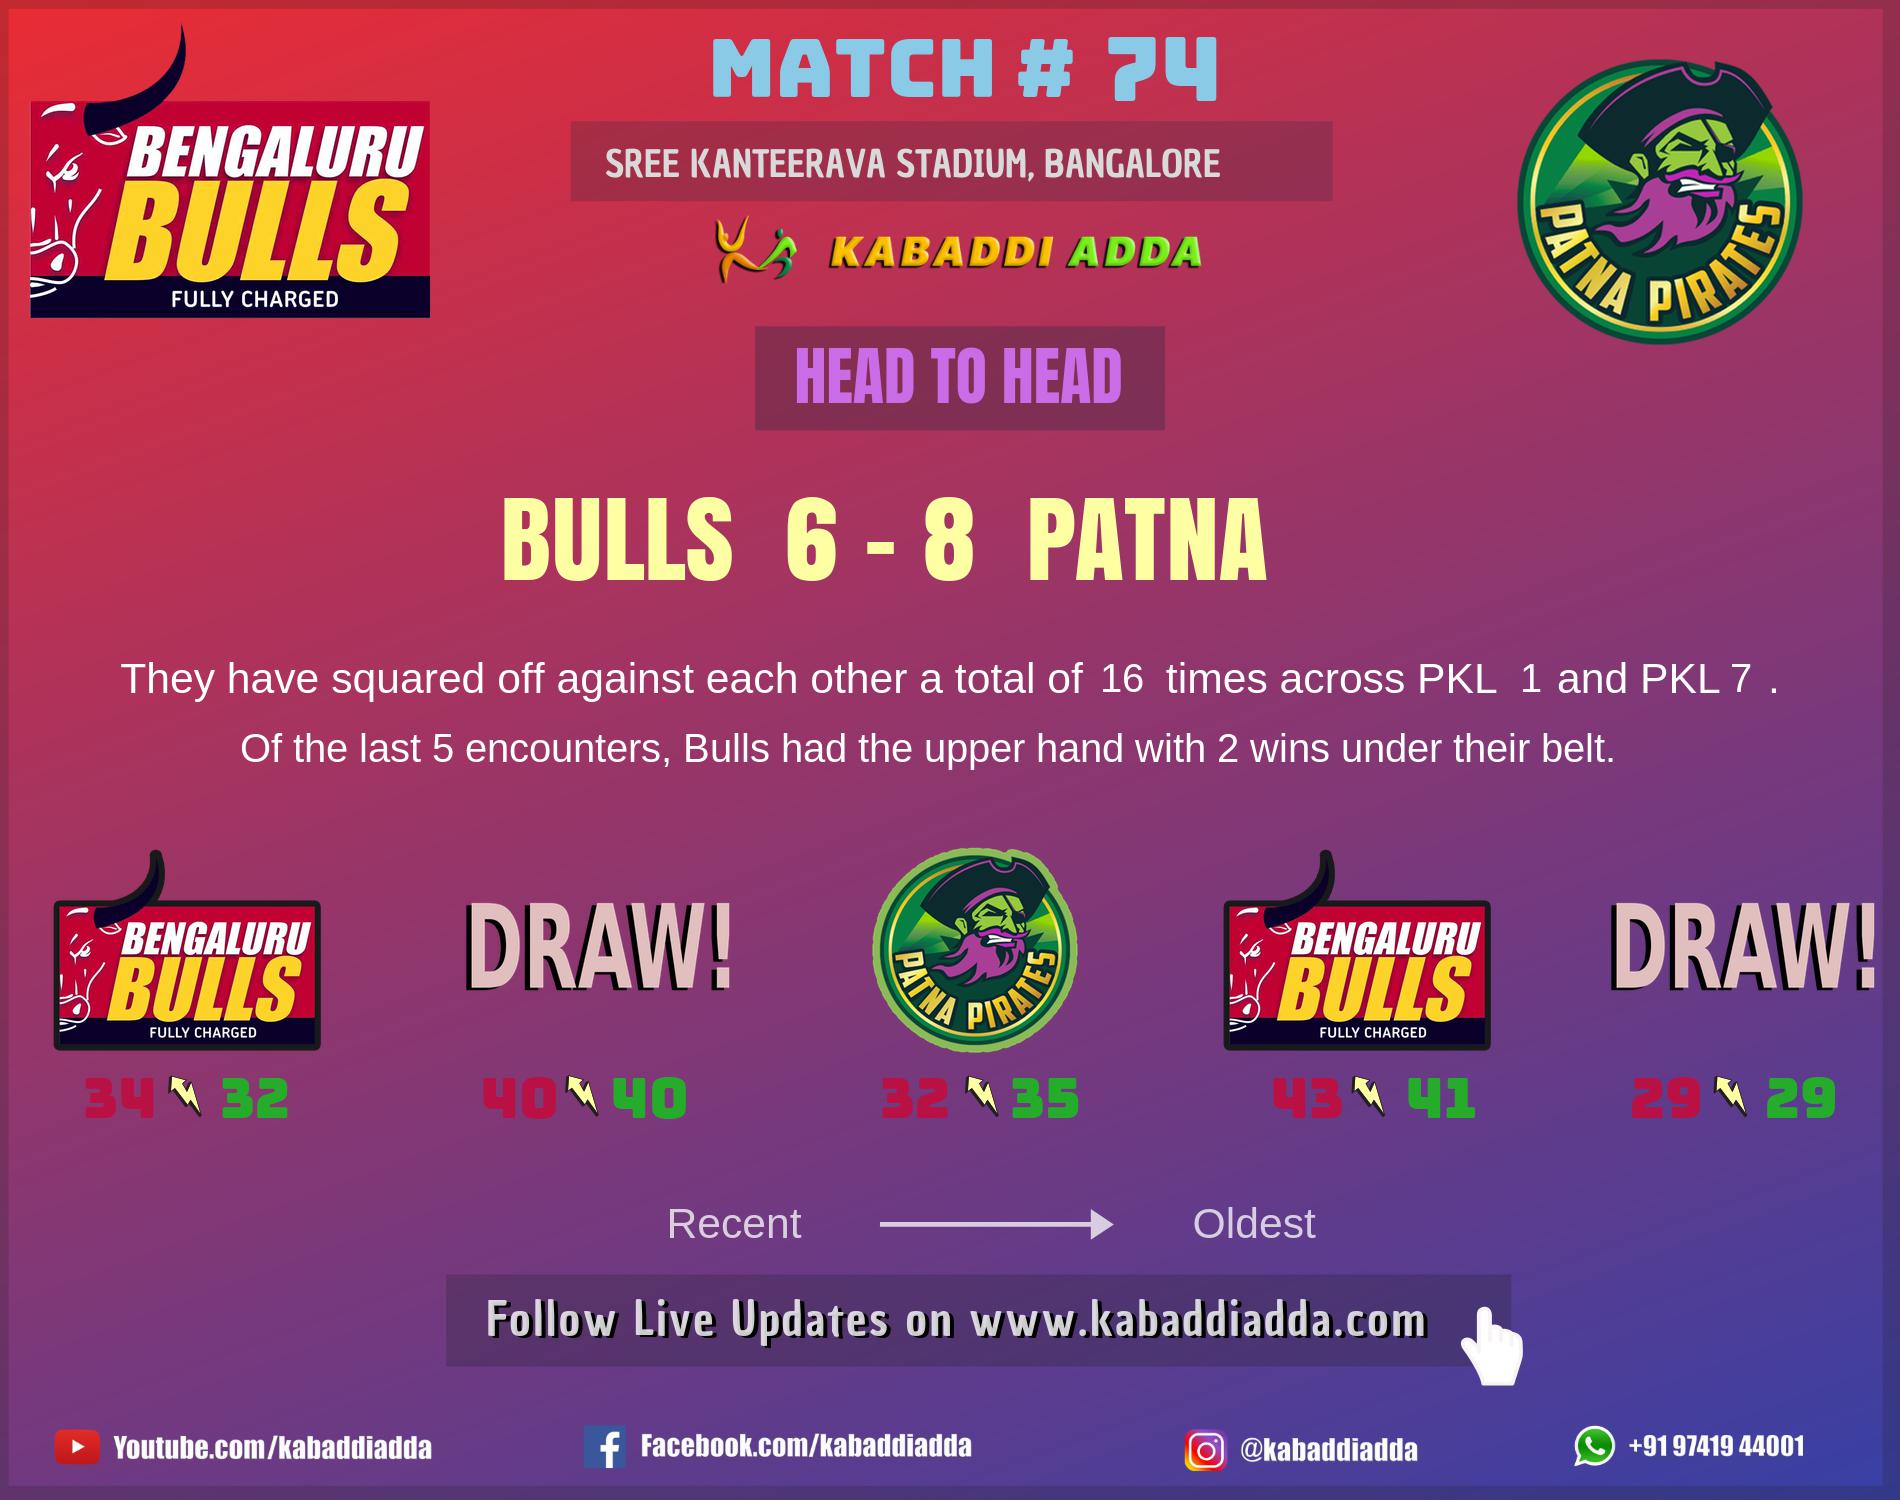 Bengaluru Bulls is playing against Patna Pirates